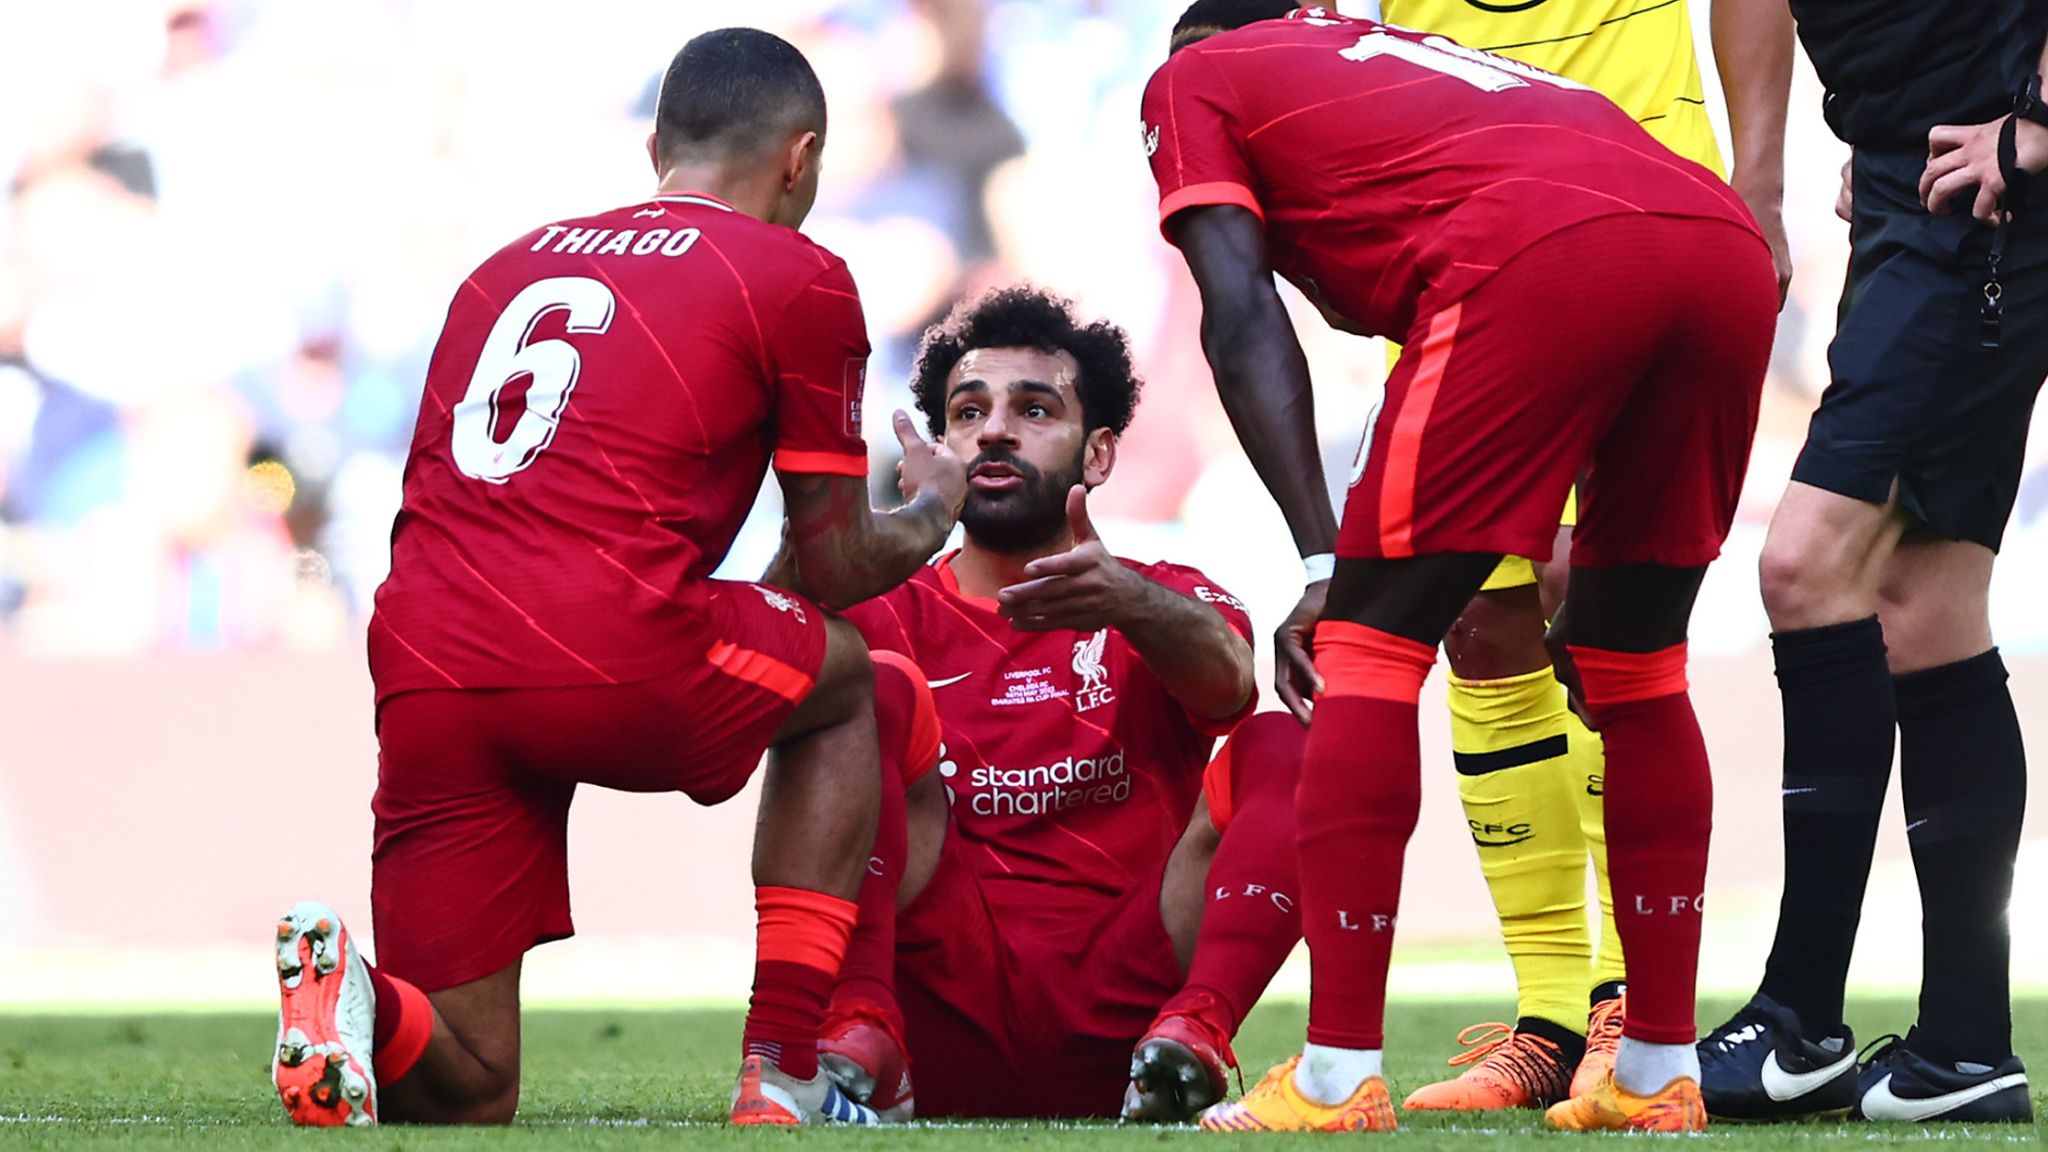 Dokter Timnas Mesir Ungkap Salah Alami Cedera Saat Bermain di final Champions League